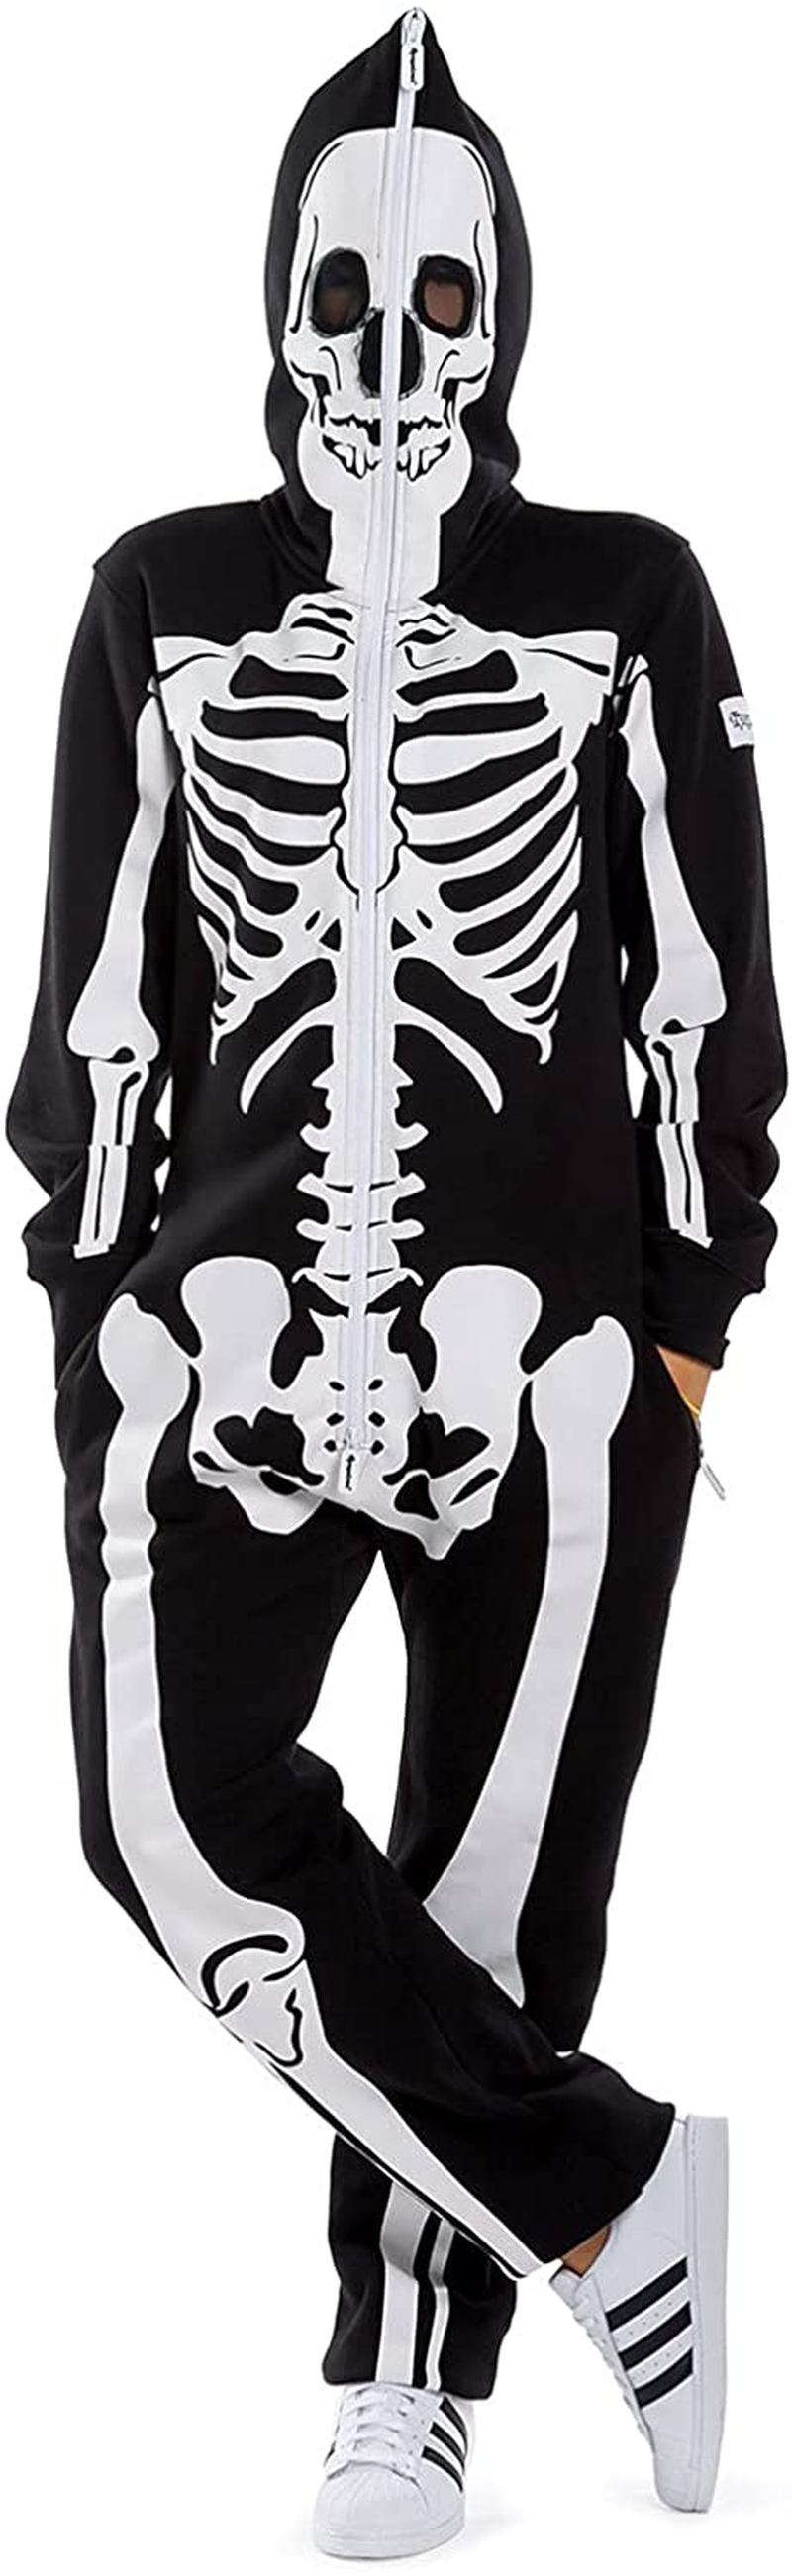 Tipsy Elves' Women's Skeleton Costume - Scary Black and White Halloween Jumpsuit